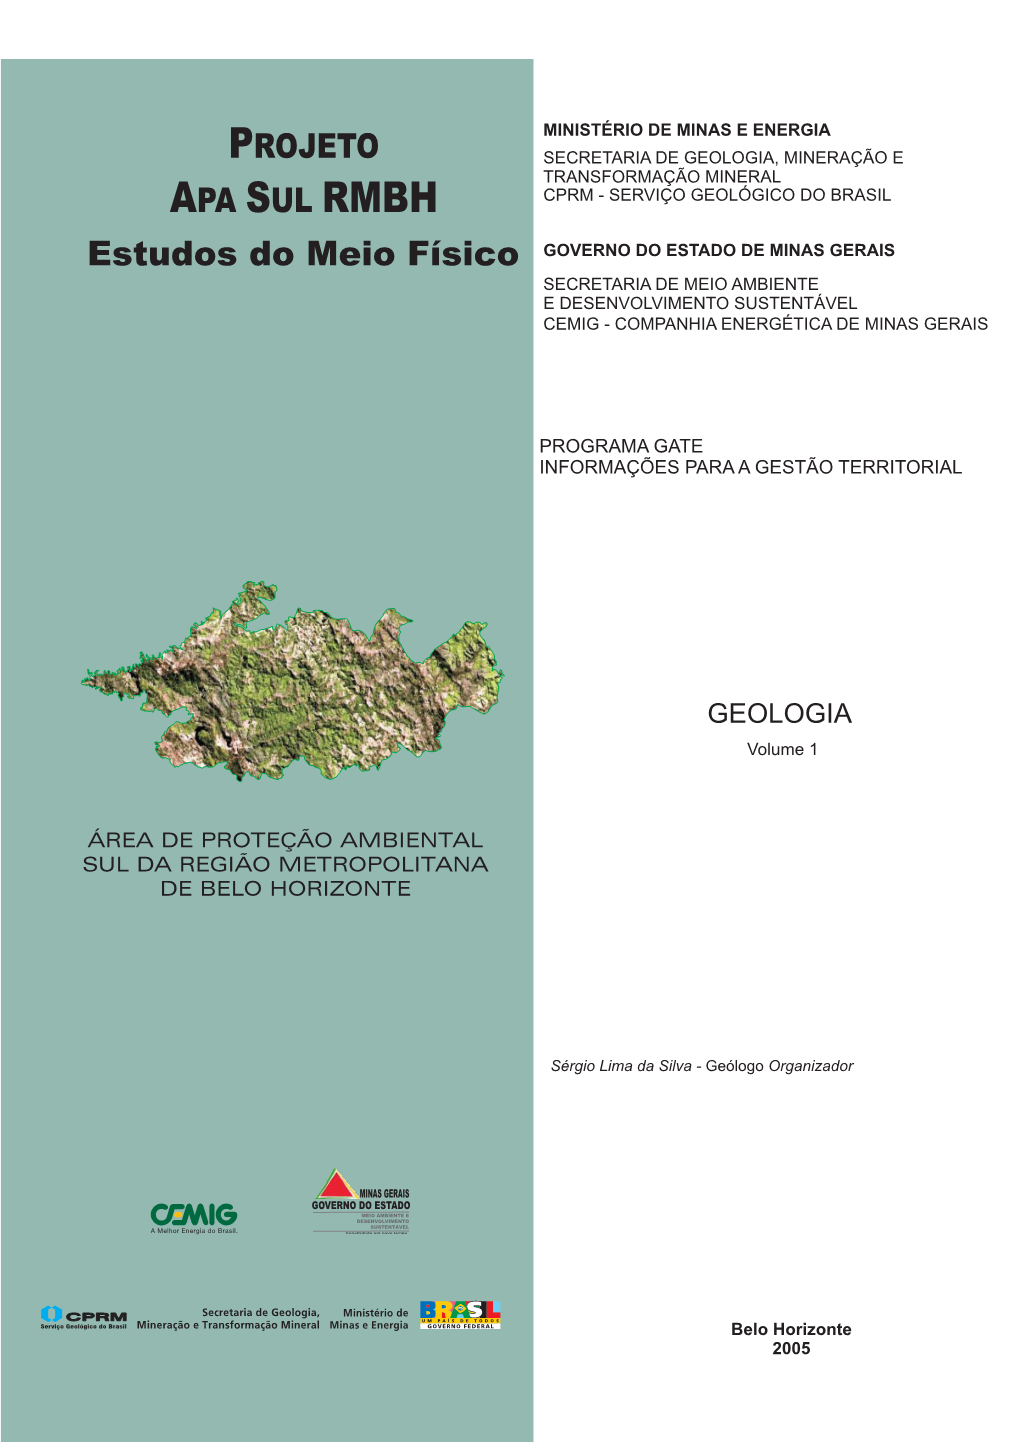 Geologia, Mineração E Transformação Mineral Apa S Ul Rmbh Cprm - Serviço Geológico Do Brasil